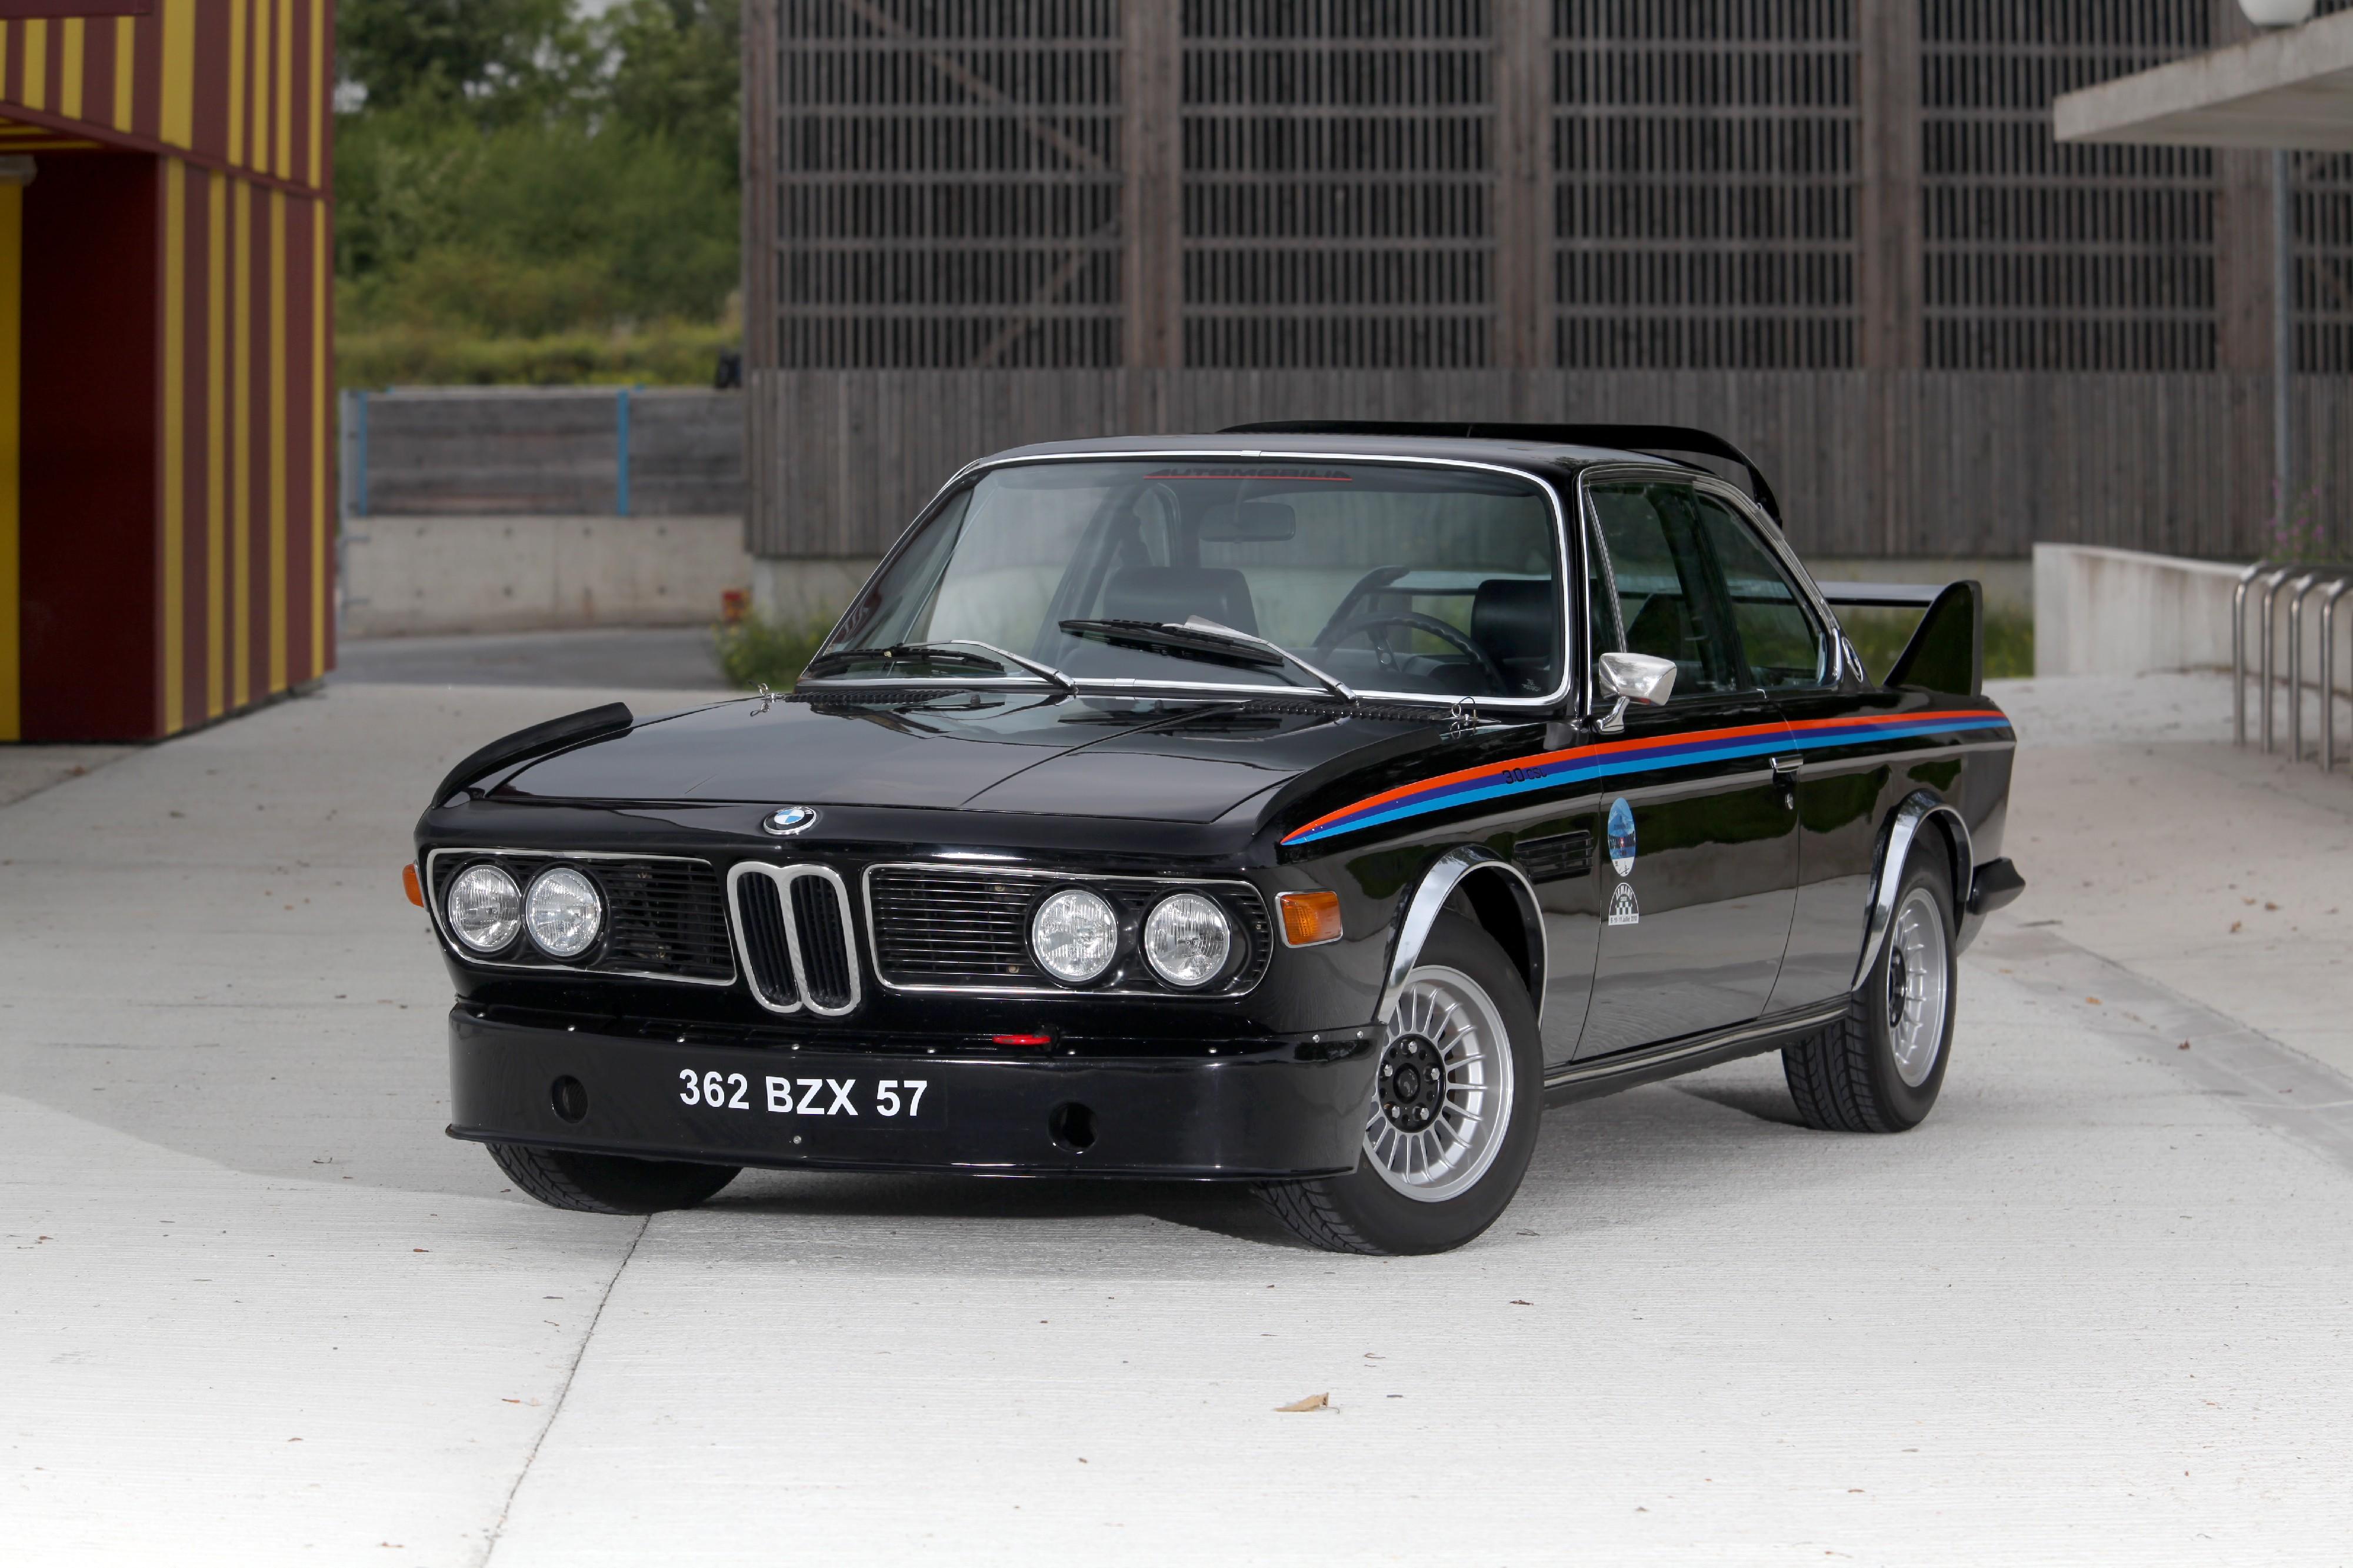 0 3.00. BMW 3.0 CSL 1971. BMW 3.0 CSL 1973. 1973 BMW 3.0 CSL (e9). BMW e9 30csl.